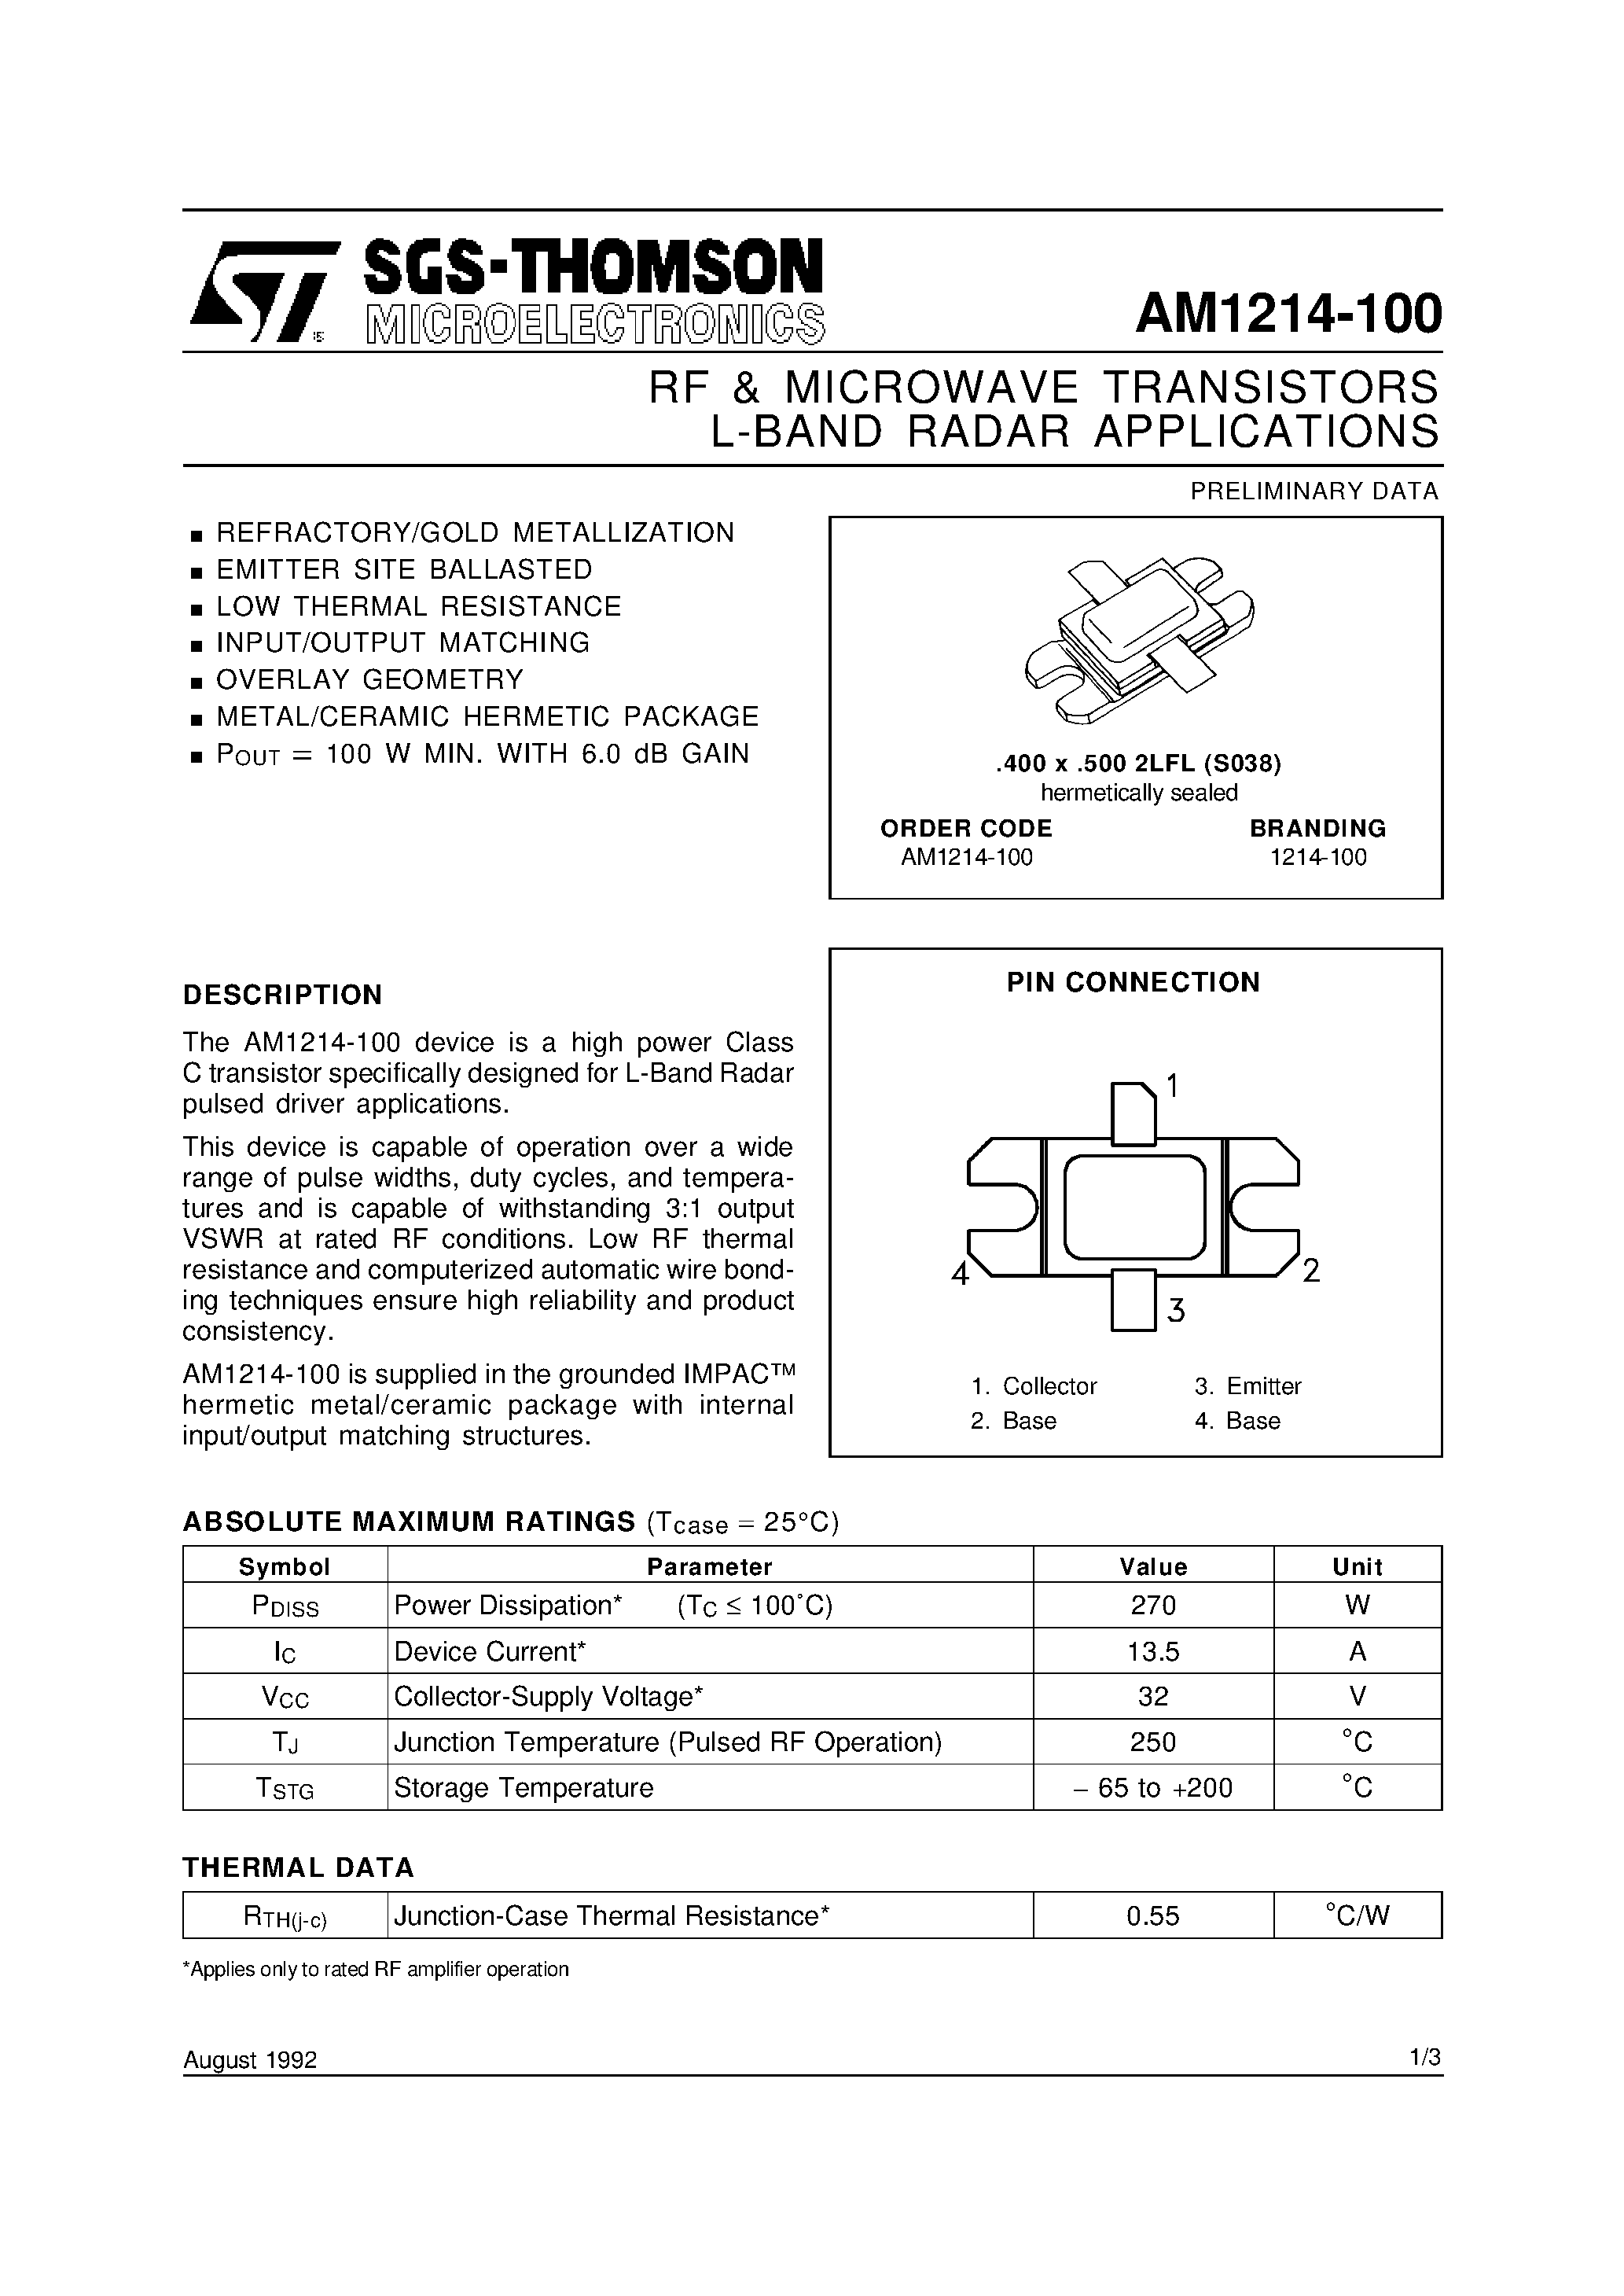 Datasheet AM1214-100 - L-BAND RADAR APPLICATIONS RF & MICROWAVE TRANSISTORS page 1